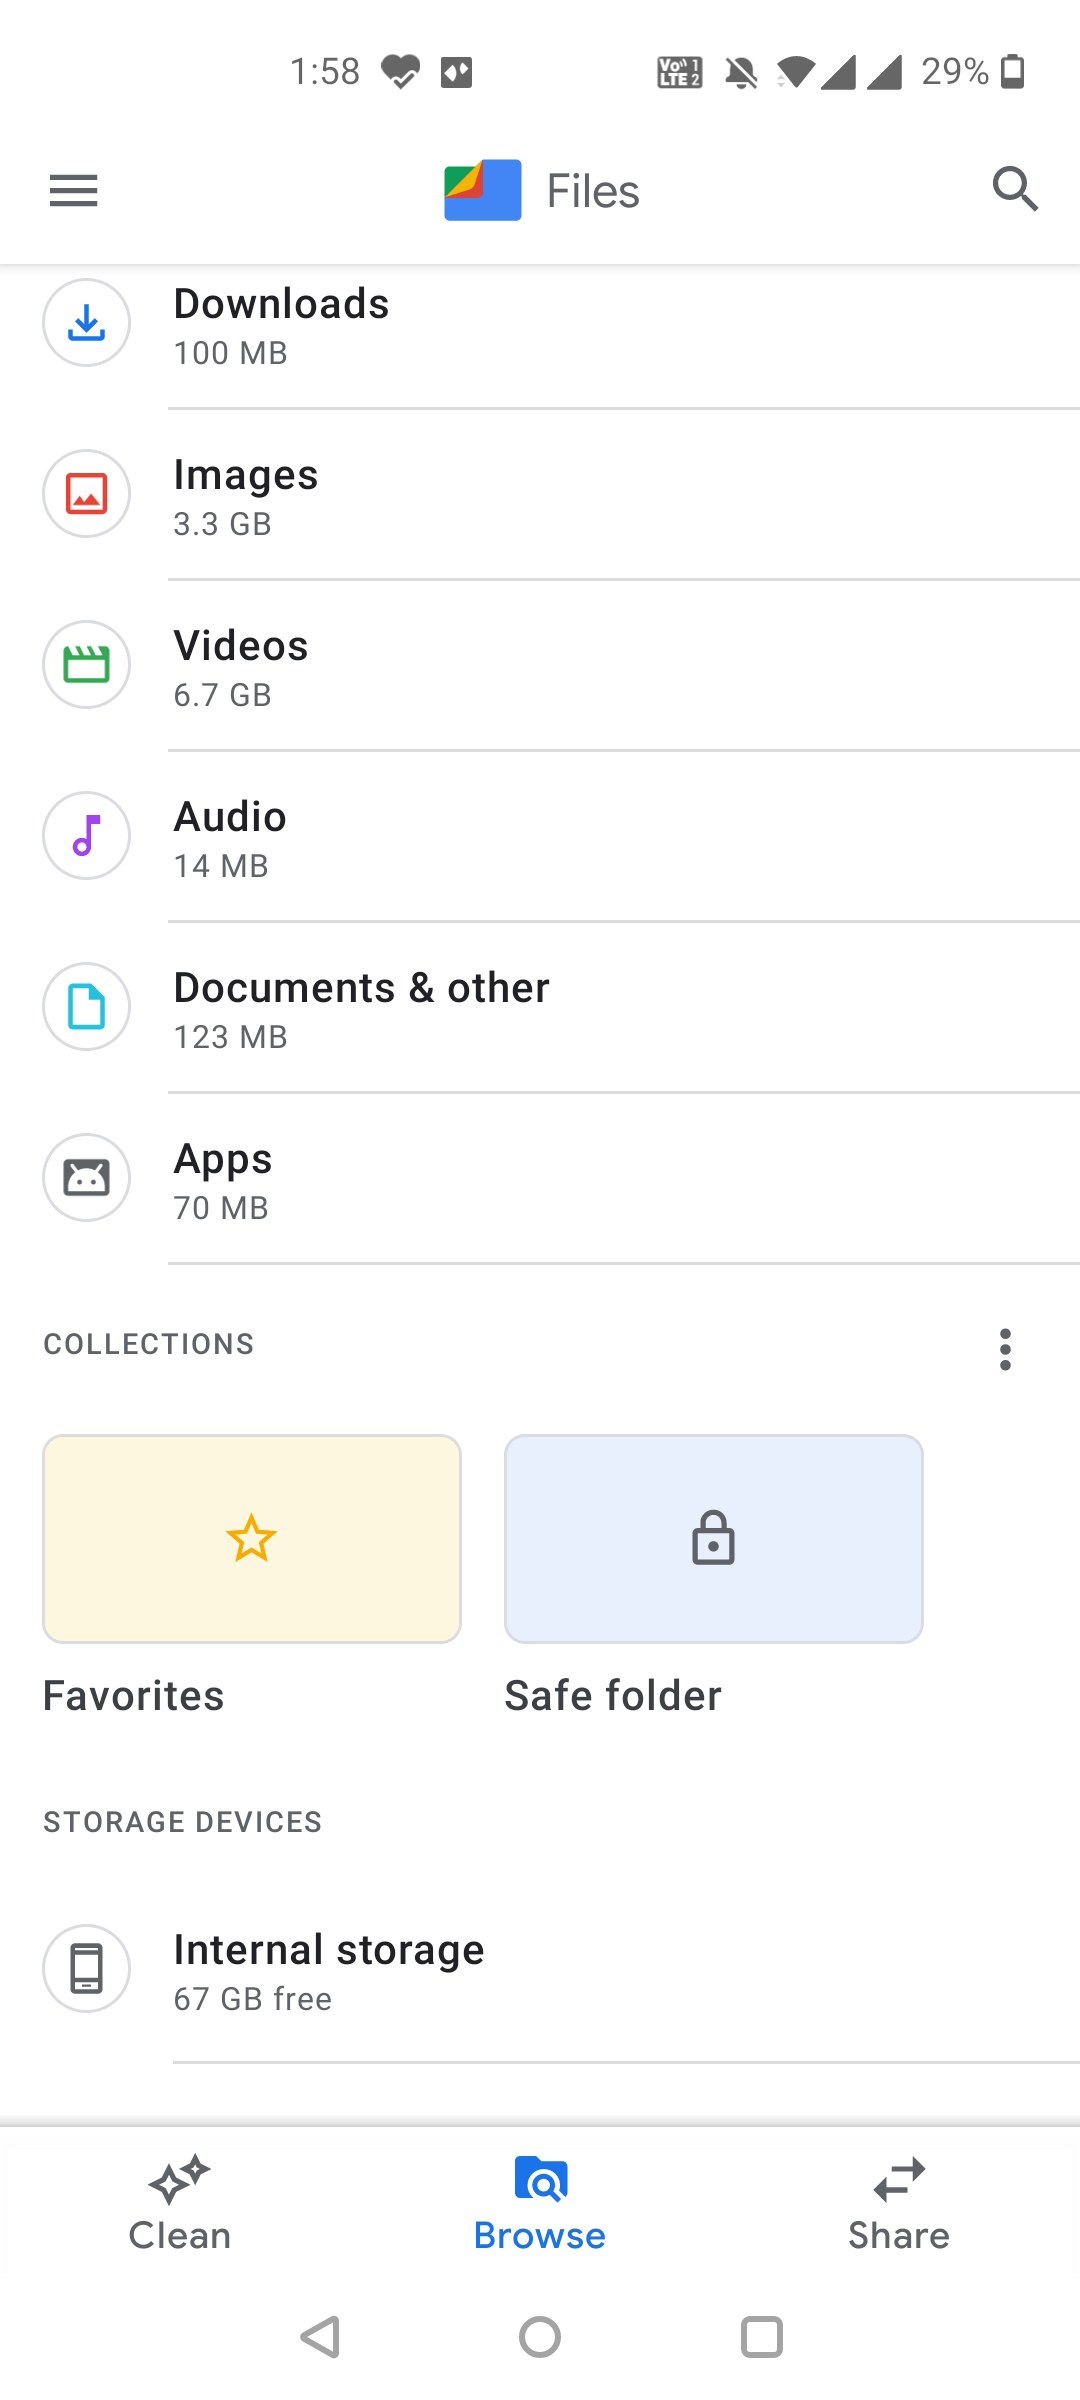 Favorites folder in Files by Google